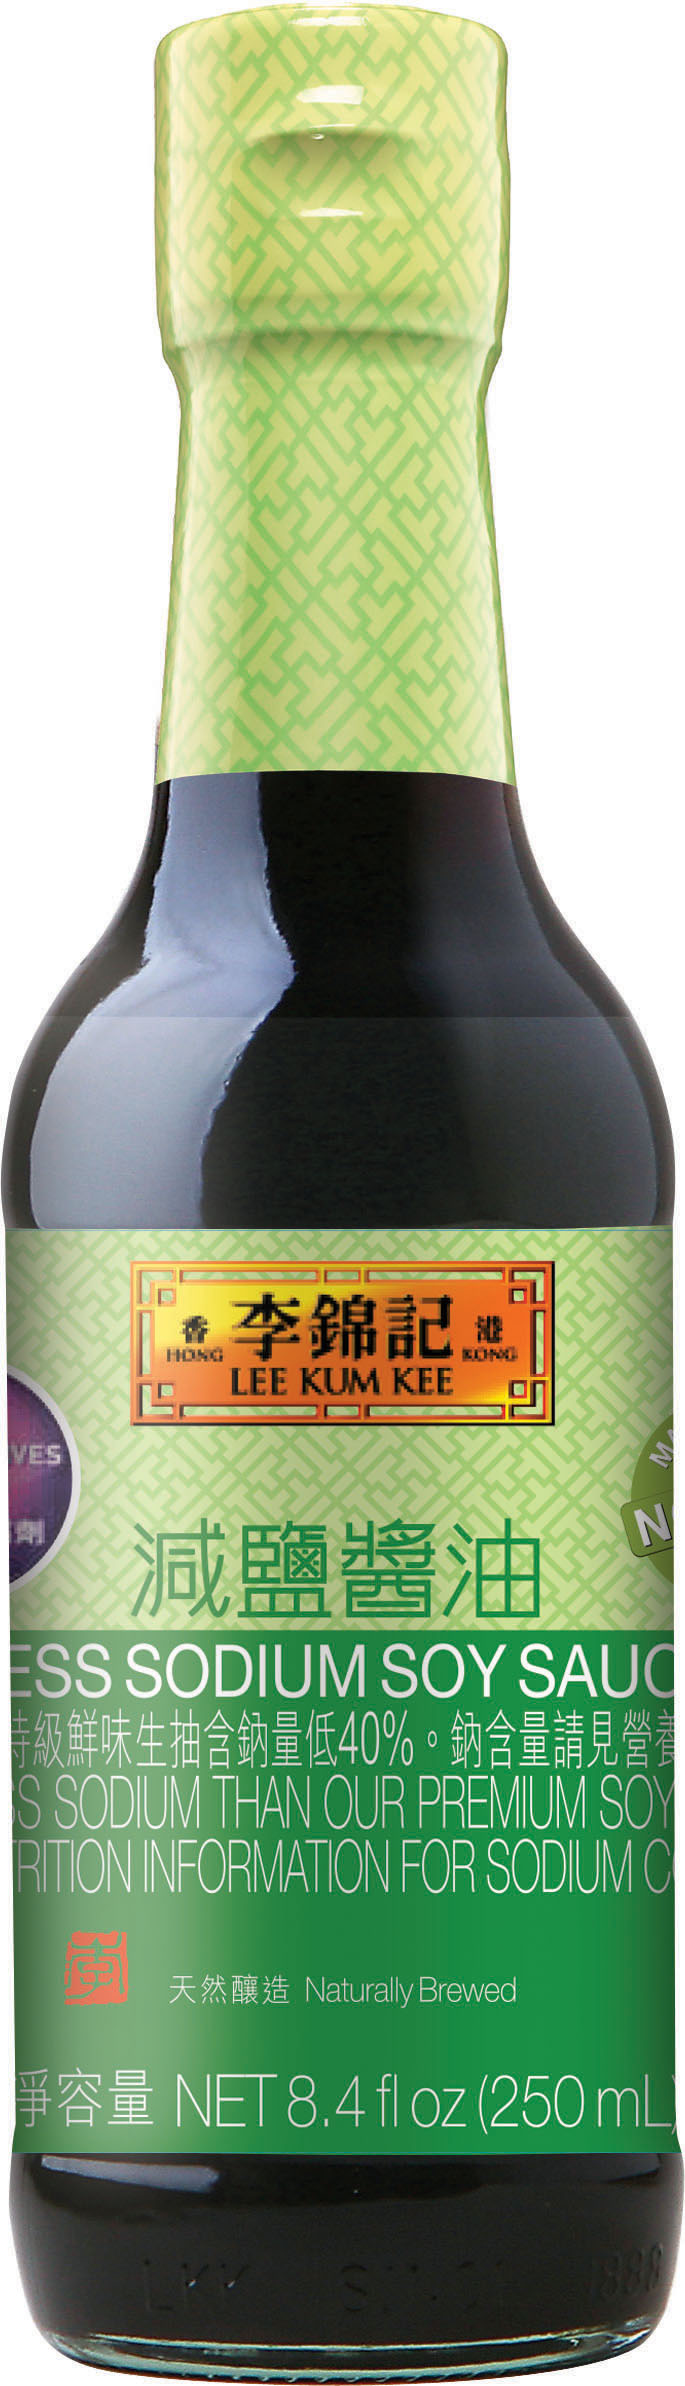 Lee Kum Kee Soy Sauce 16.9 oz